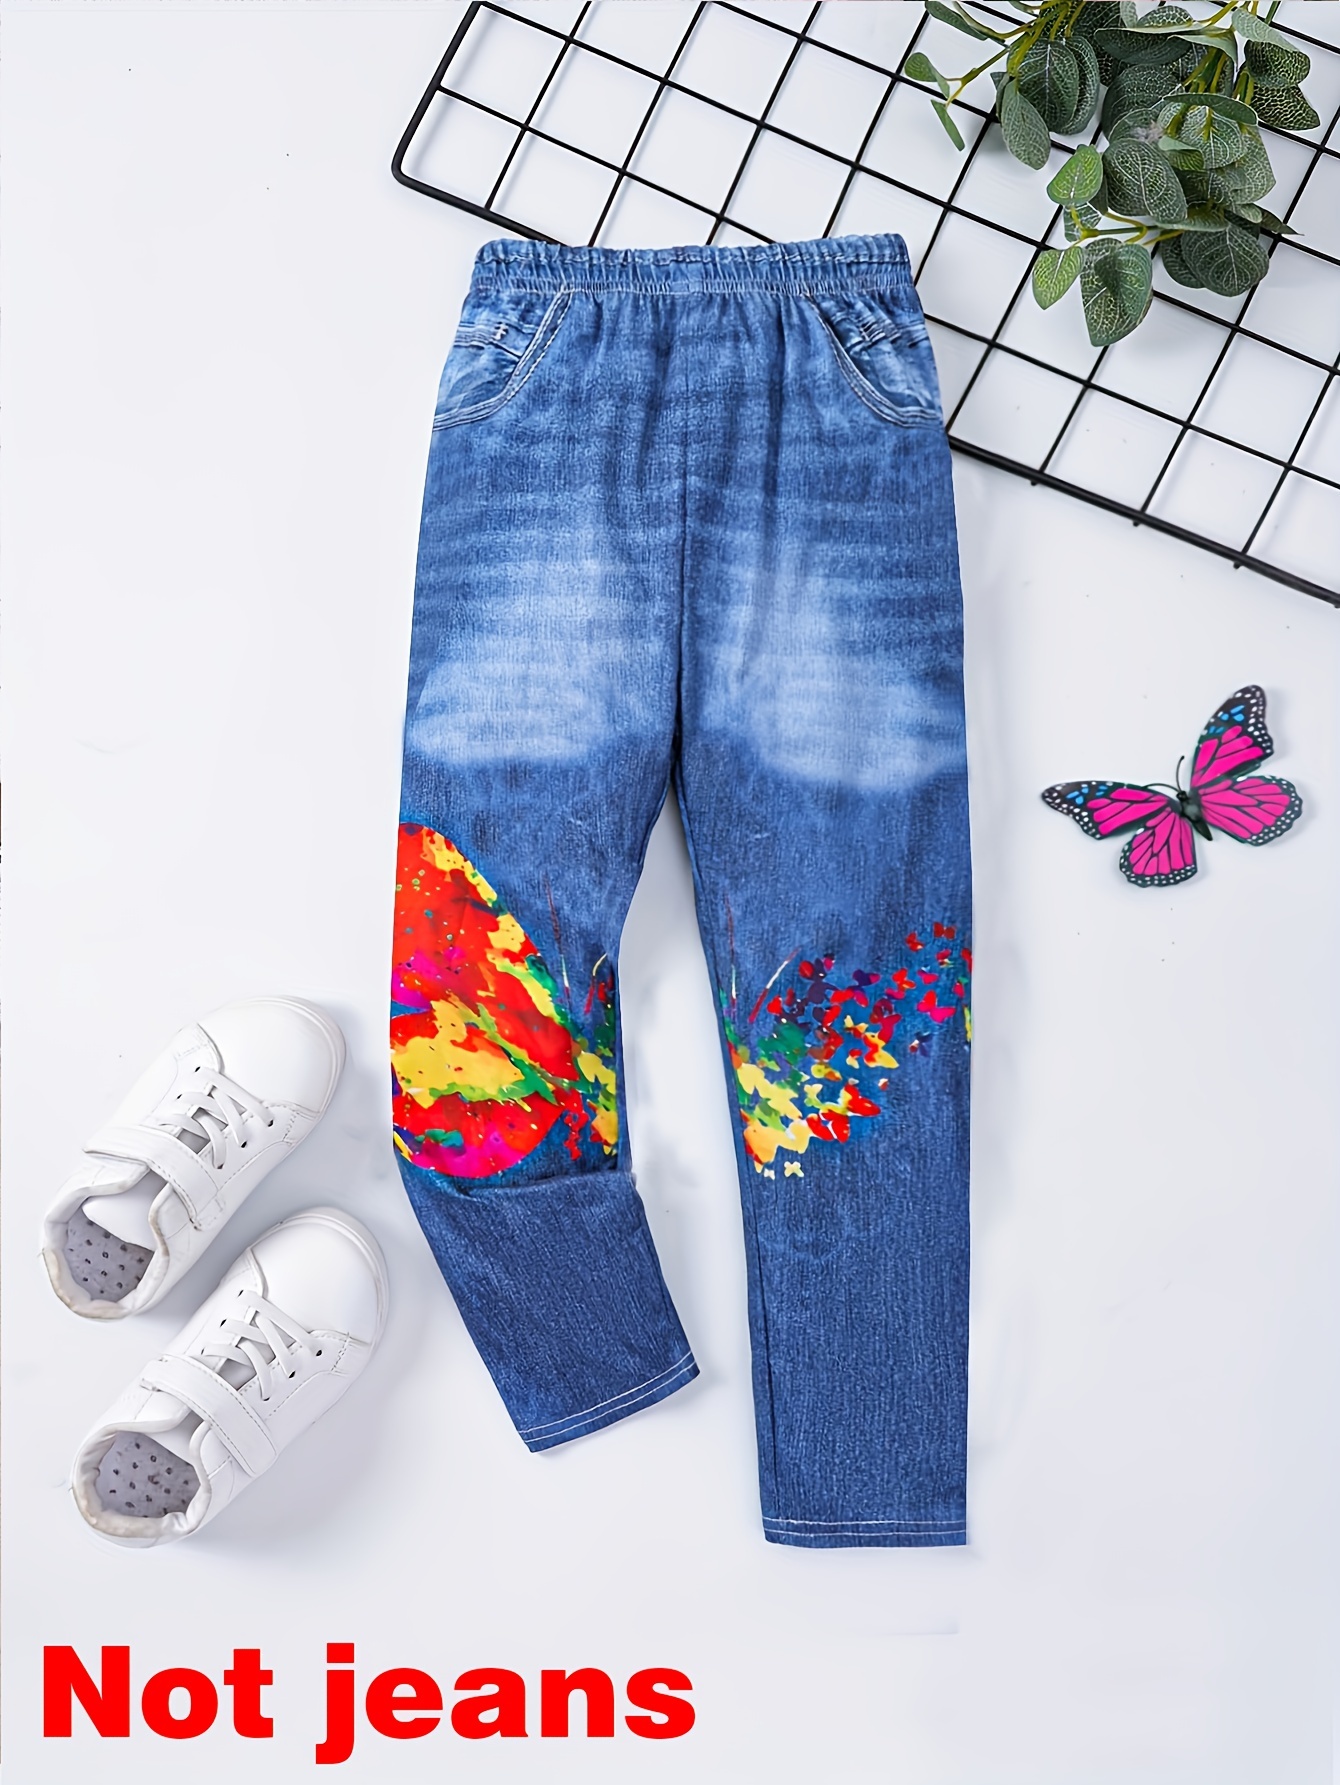 Teen Girls' Fashionable Butterfly Printed Jeans Leggings, Imitation Denim